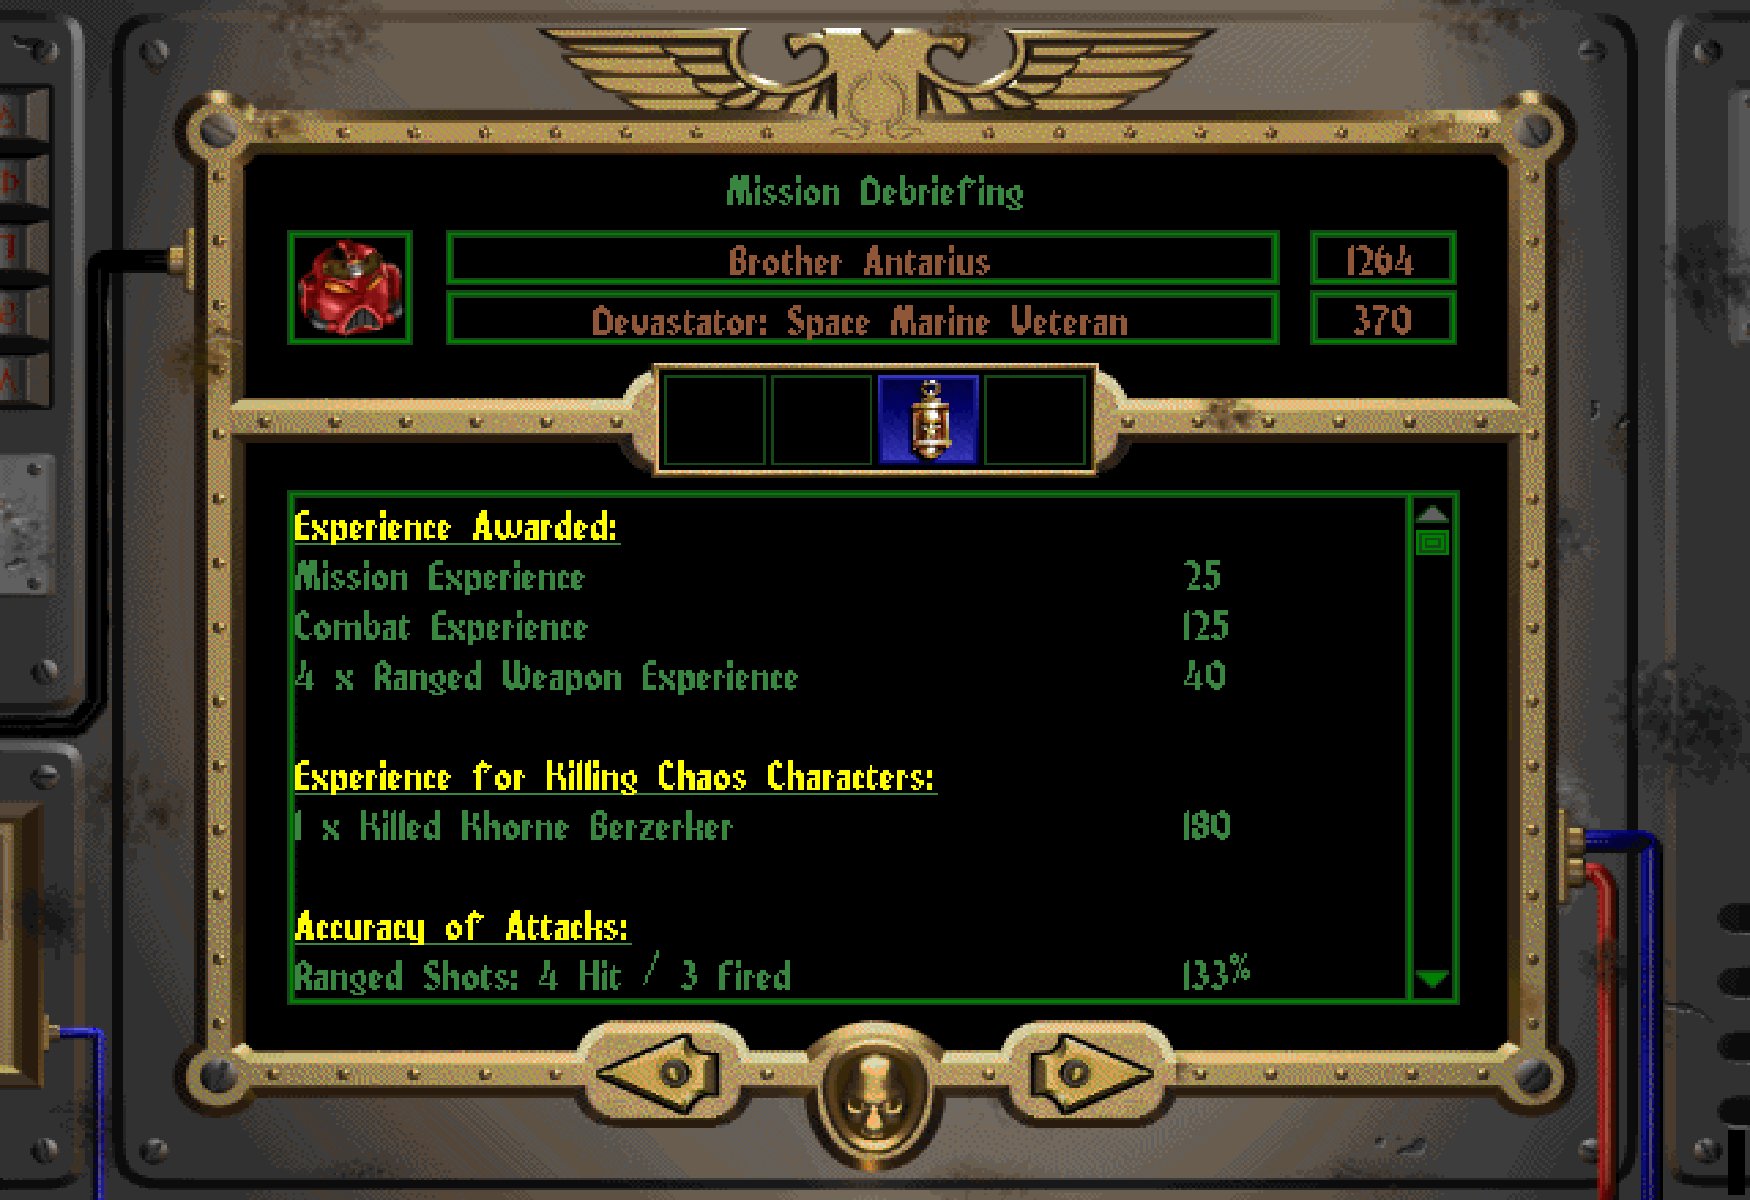 Скриншот 2 к игре Warhammer 40000: Chaos Gate v1.2 hotfix 3 [GOG] (1998)